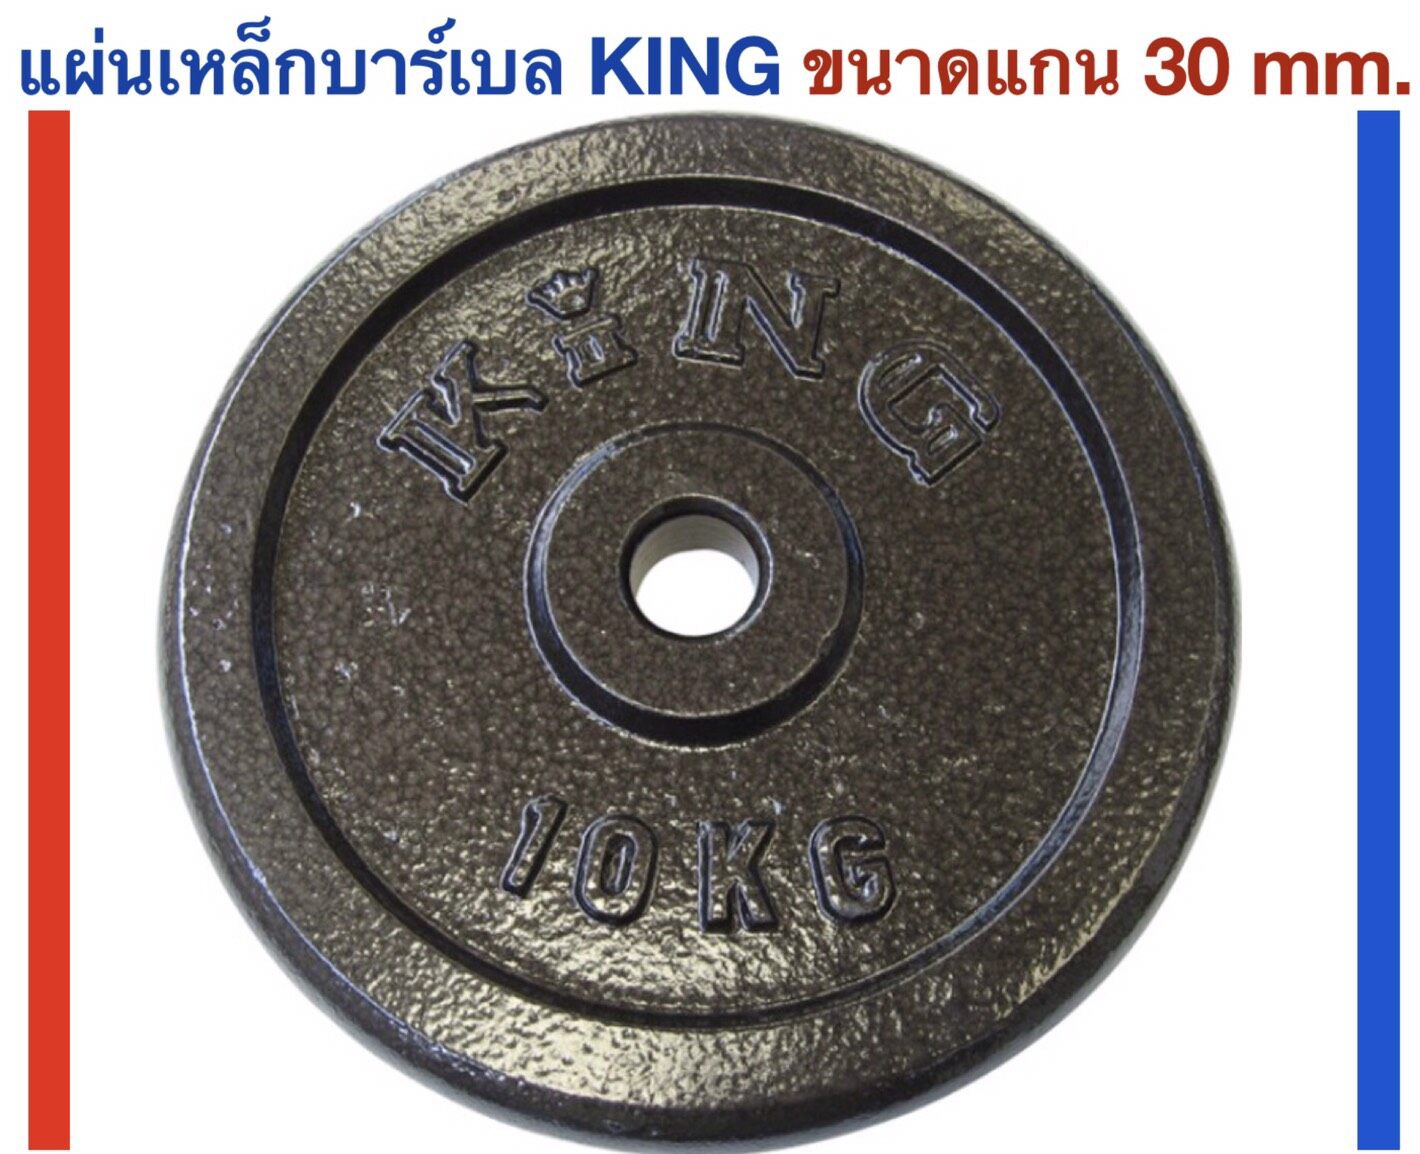 KING แผ่นเหล็กน้ำหนักสำหรับบาร์เบล ขนาดแกน 30 mm. น้ำหนัก 10 Kg.